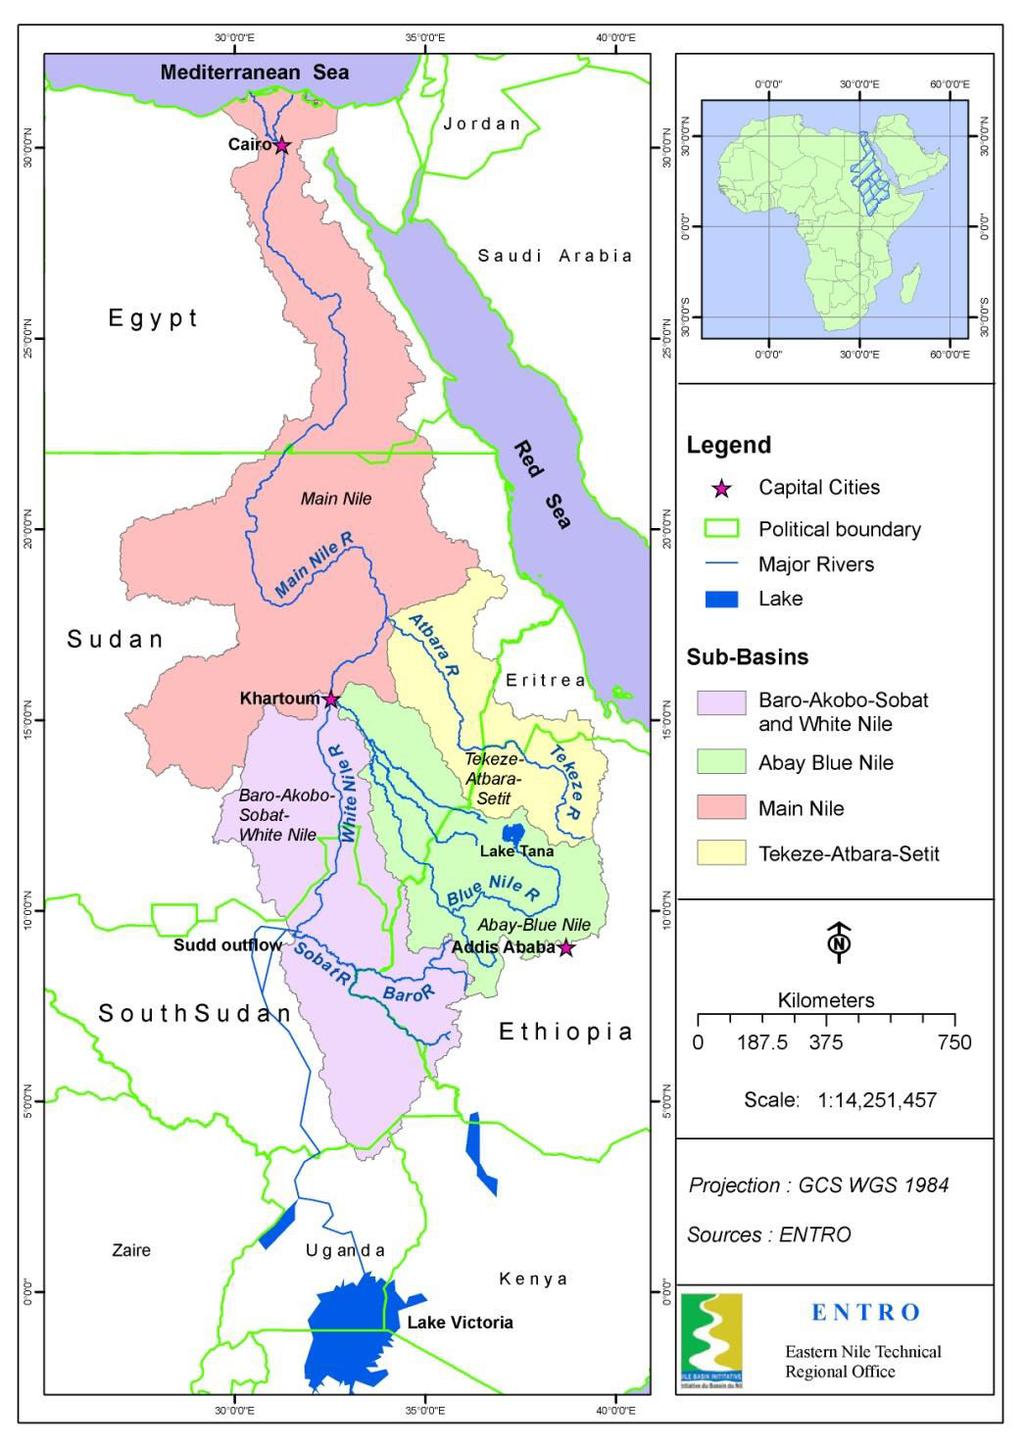 Eastern Nile characteristics Eastern Nile basin: Nile River basin without the Equatorial Lake basin Nile River length: 6,650 Km EN Basin area : 1,8 million km2 Population : 149 million Located in 4